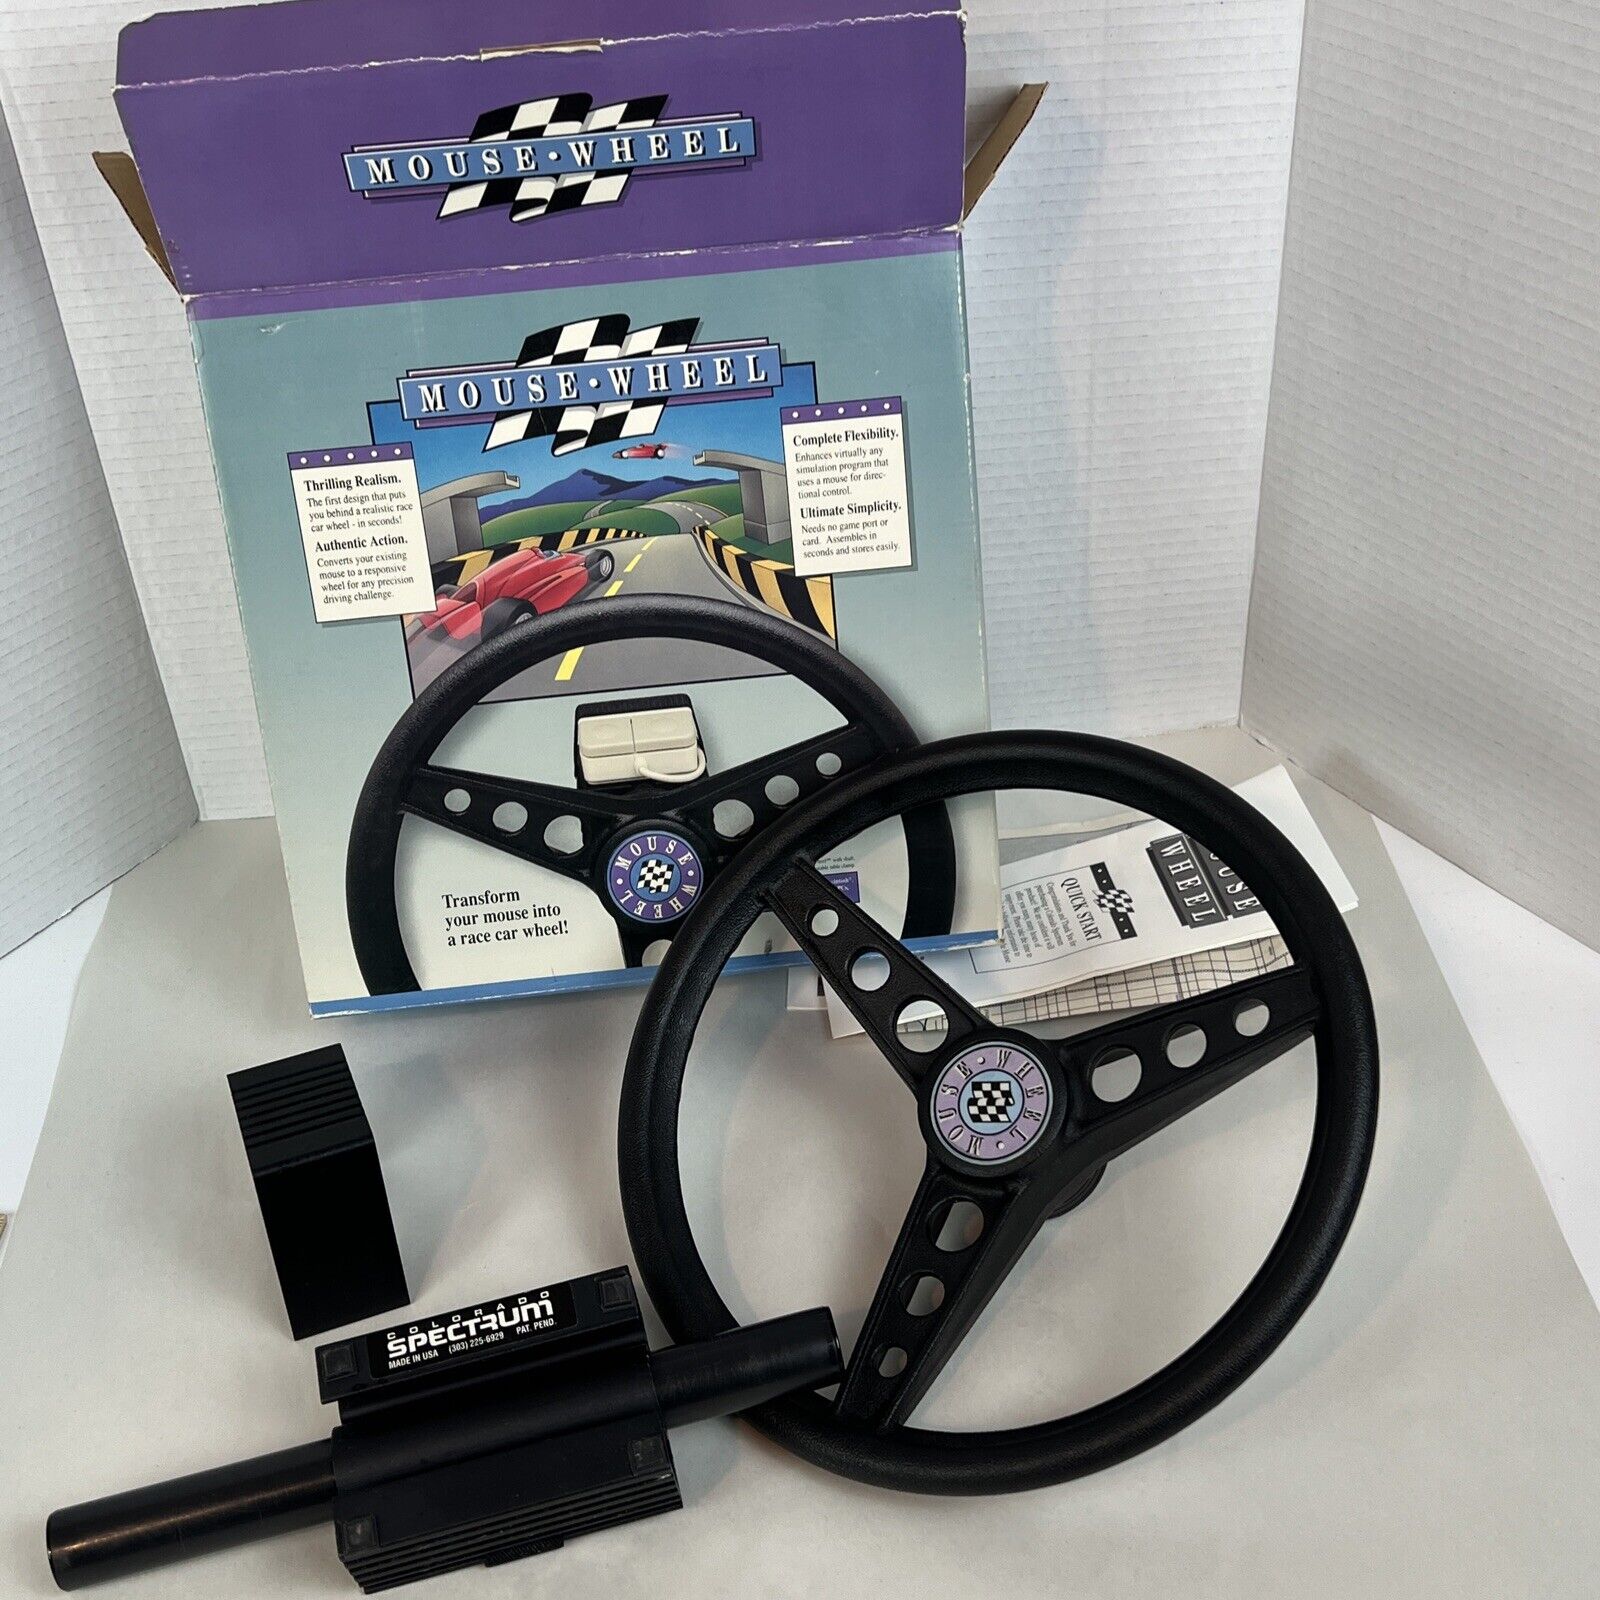 Colorado Spectrum Mouse Wheel (1992) RARE Big Box PC